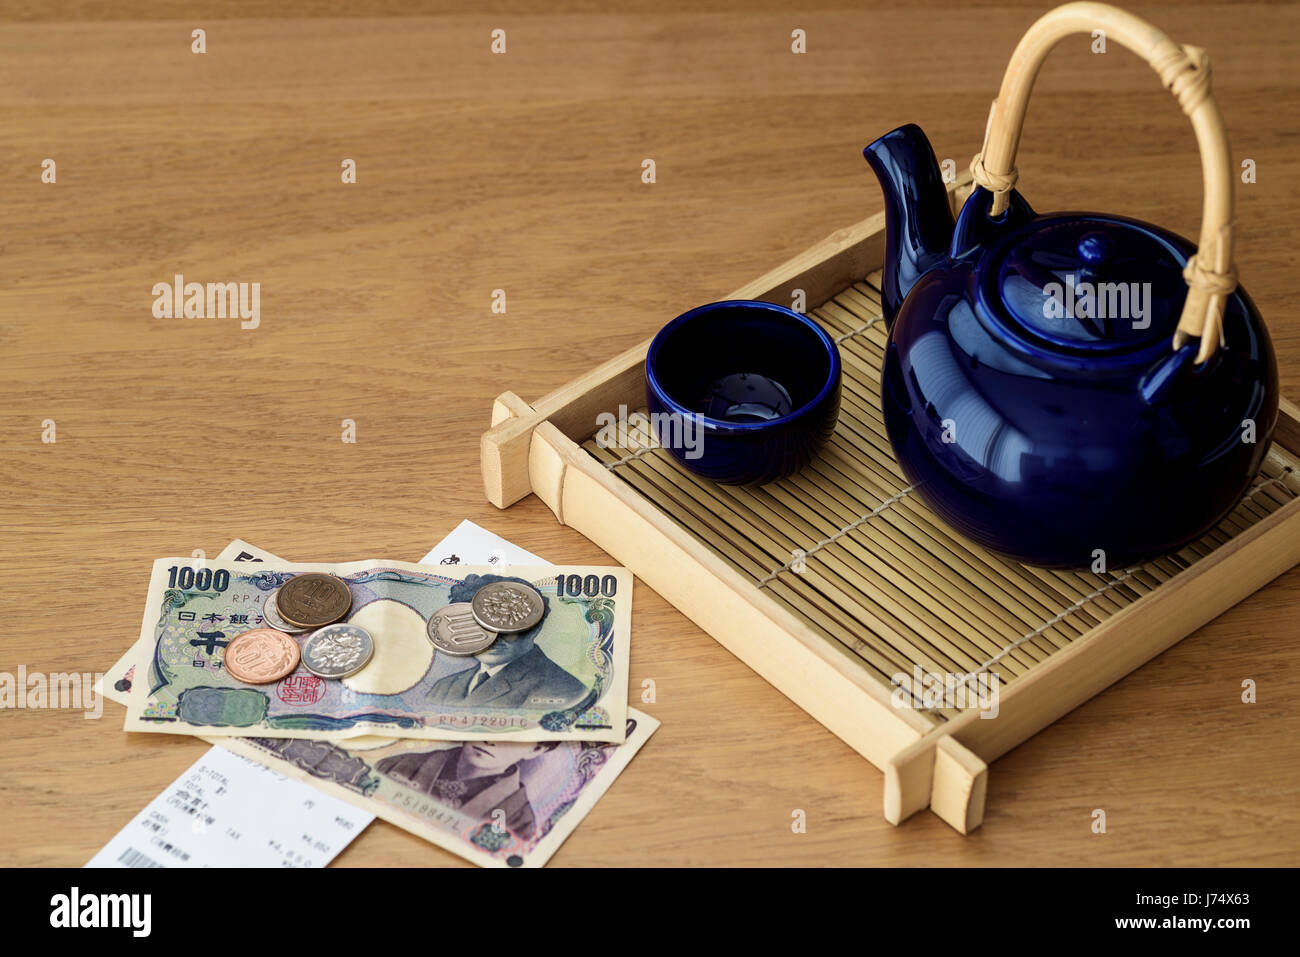 Japanese tea pot on bamboo tray with Yen and restaurant bill. Stock Photo